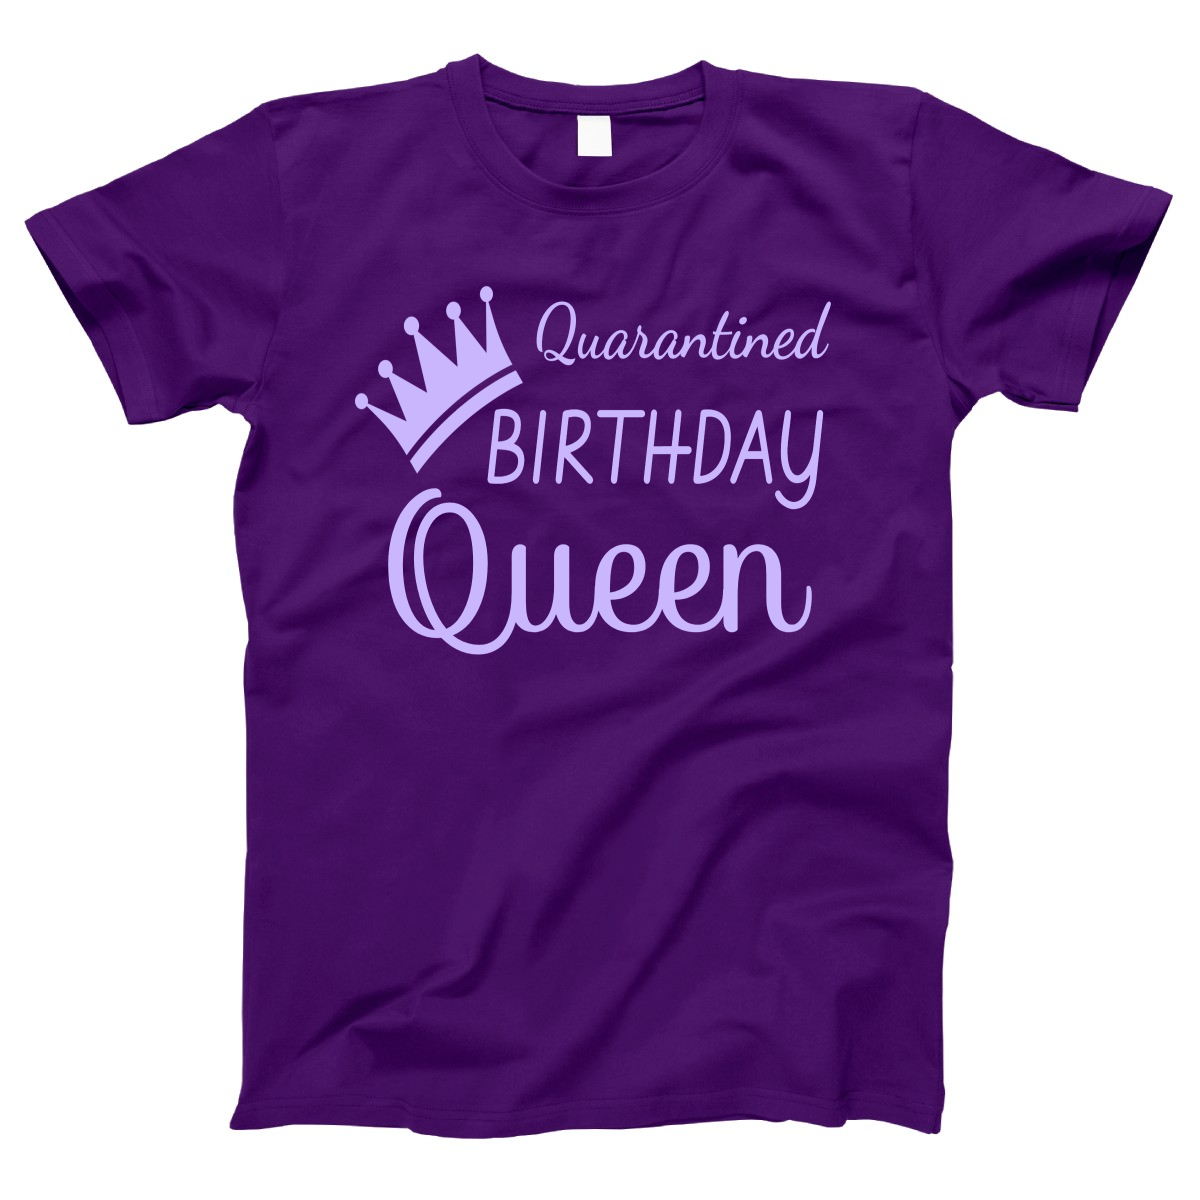 Quarantined Birthday Queen Women's T-shirt | Purple